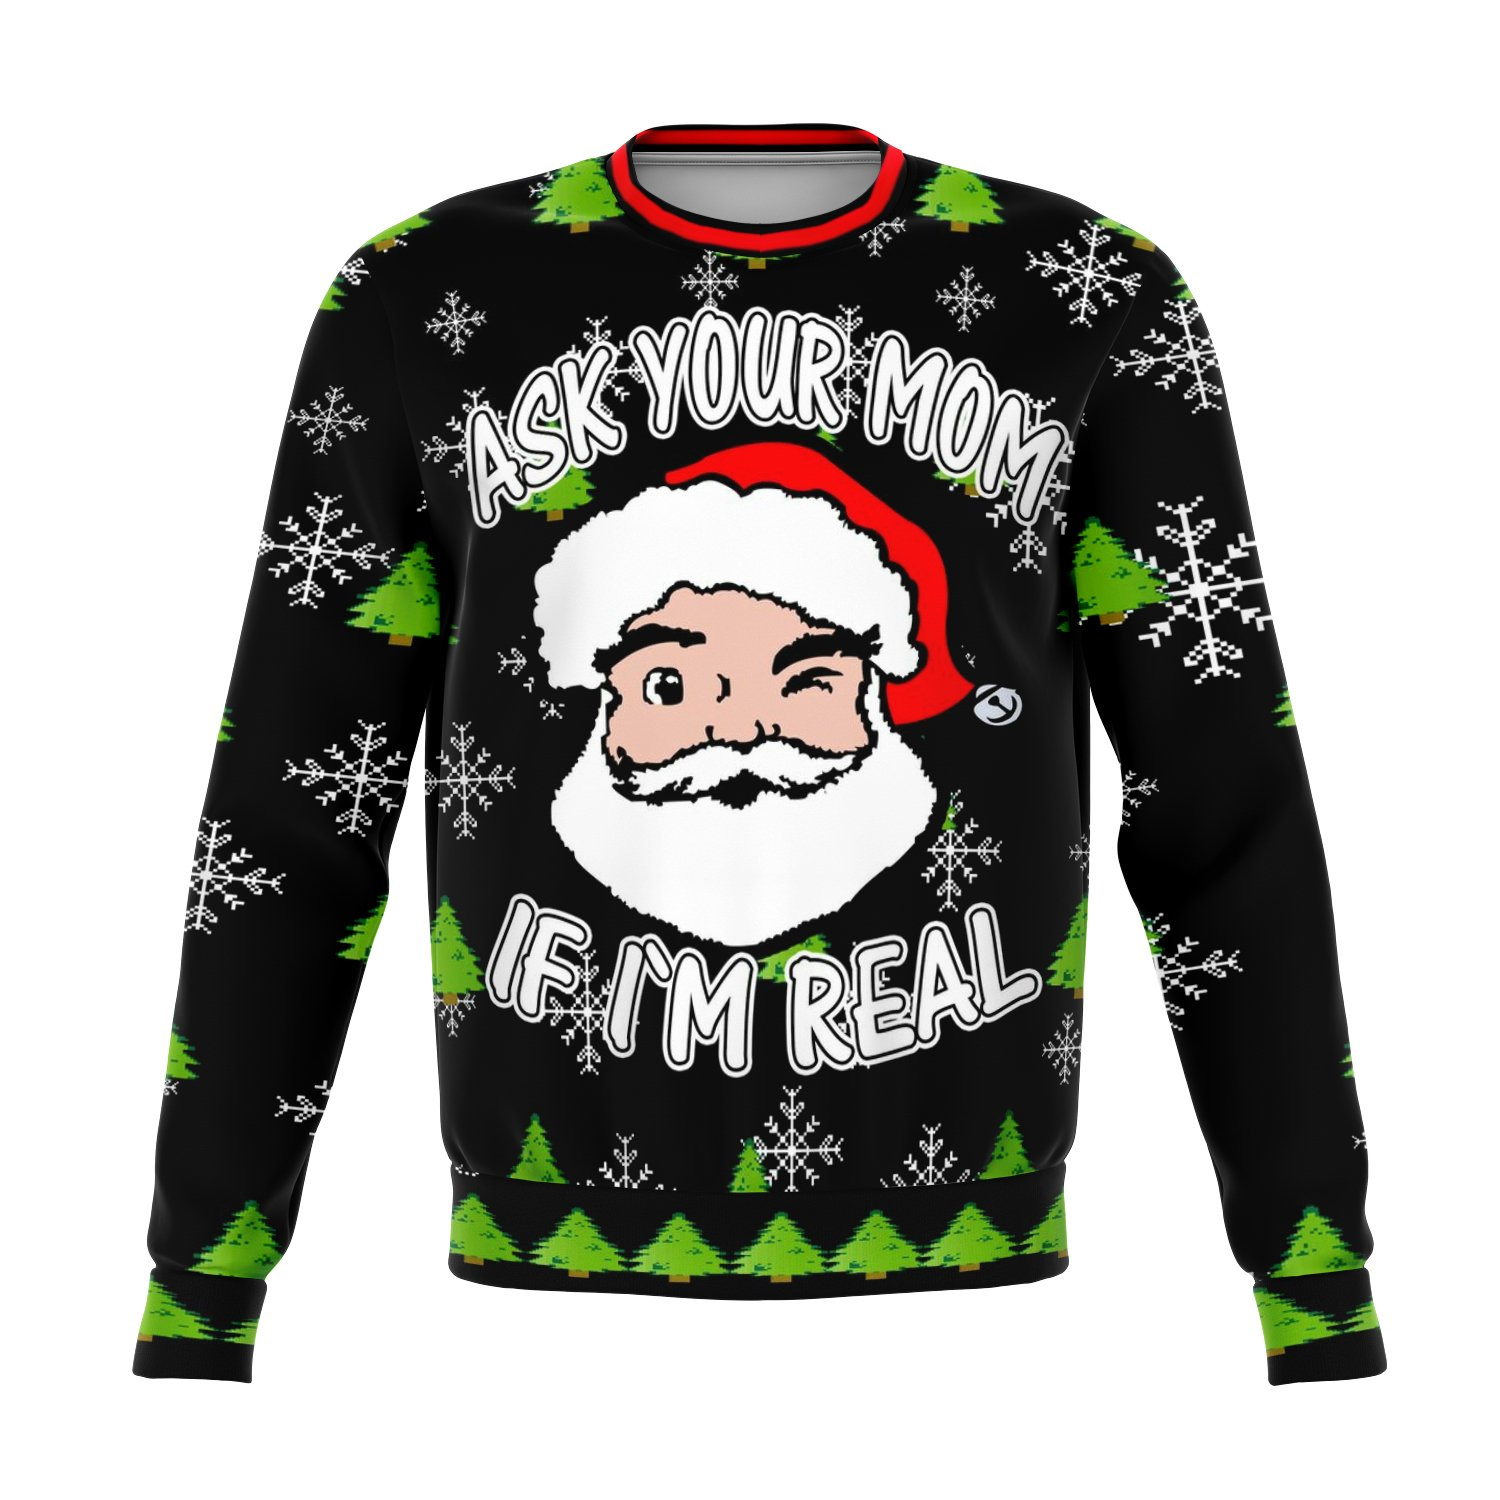 Ask Your Mom If I'M Real Dank Christmas Ugly Sweater